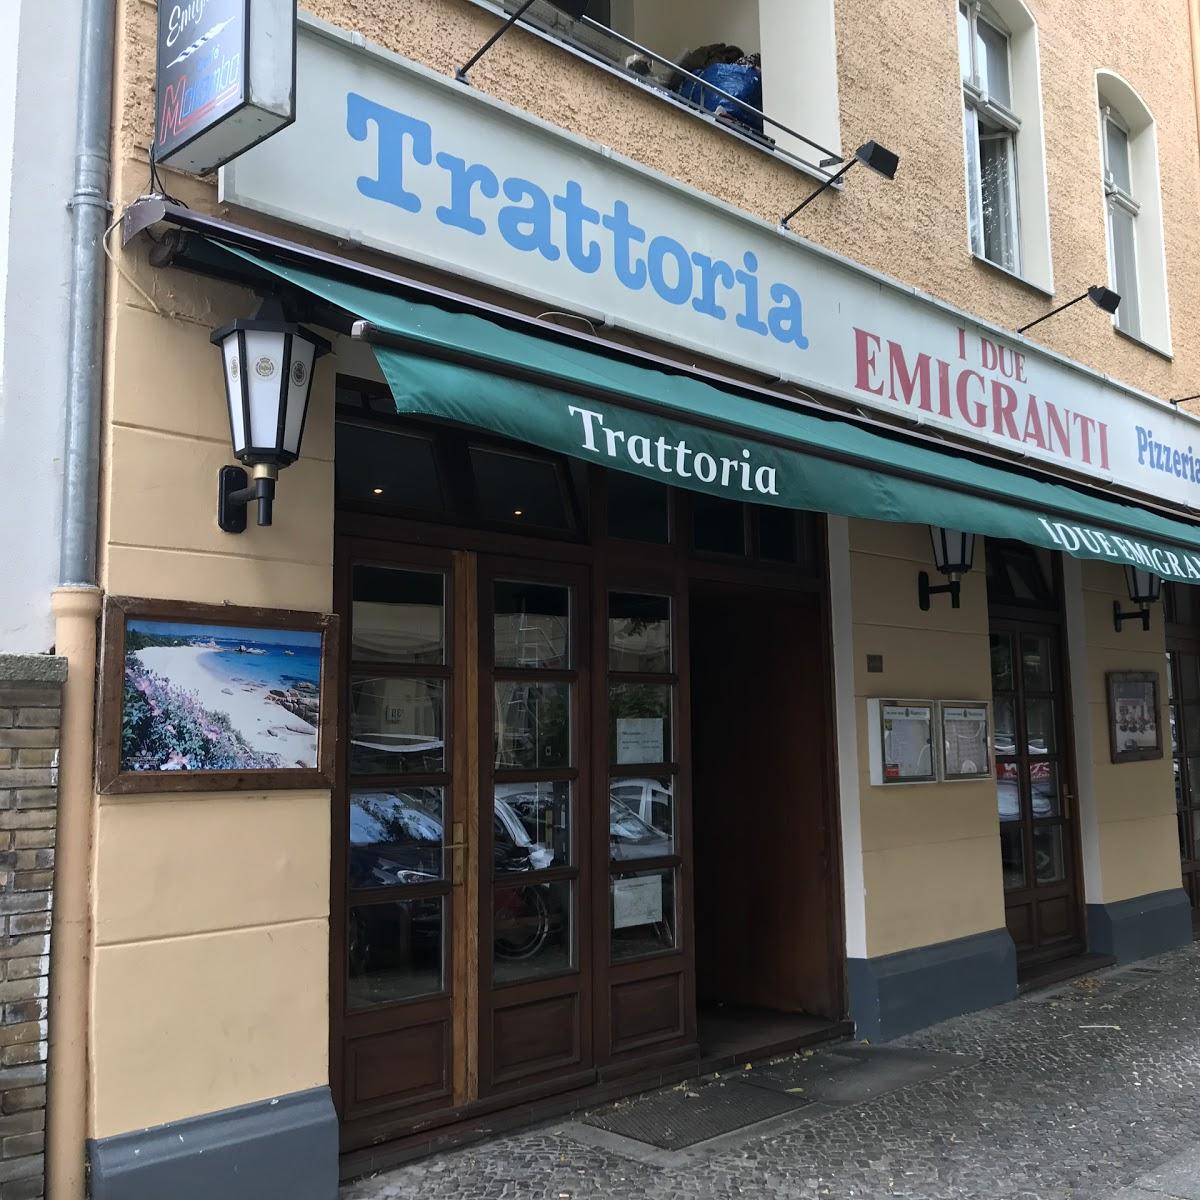 Restaurant "I due Emigranti" in Berlin